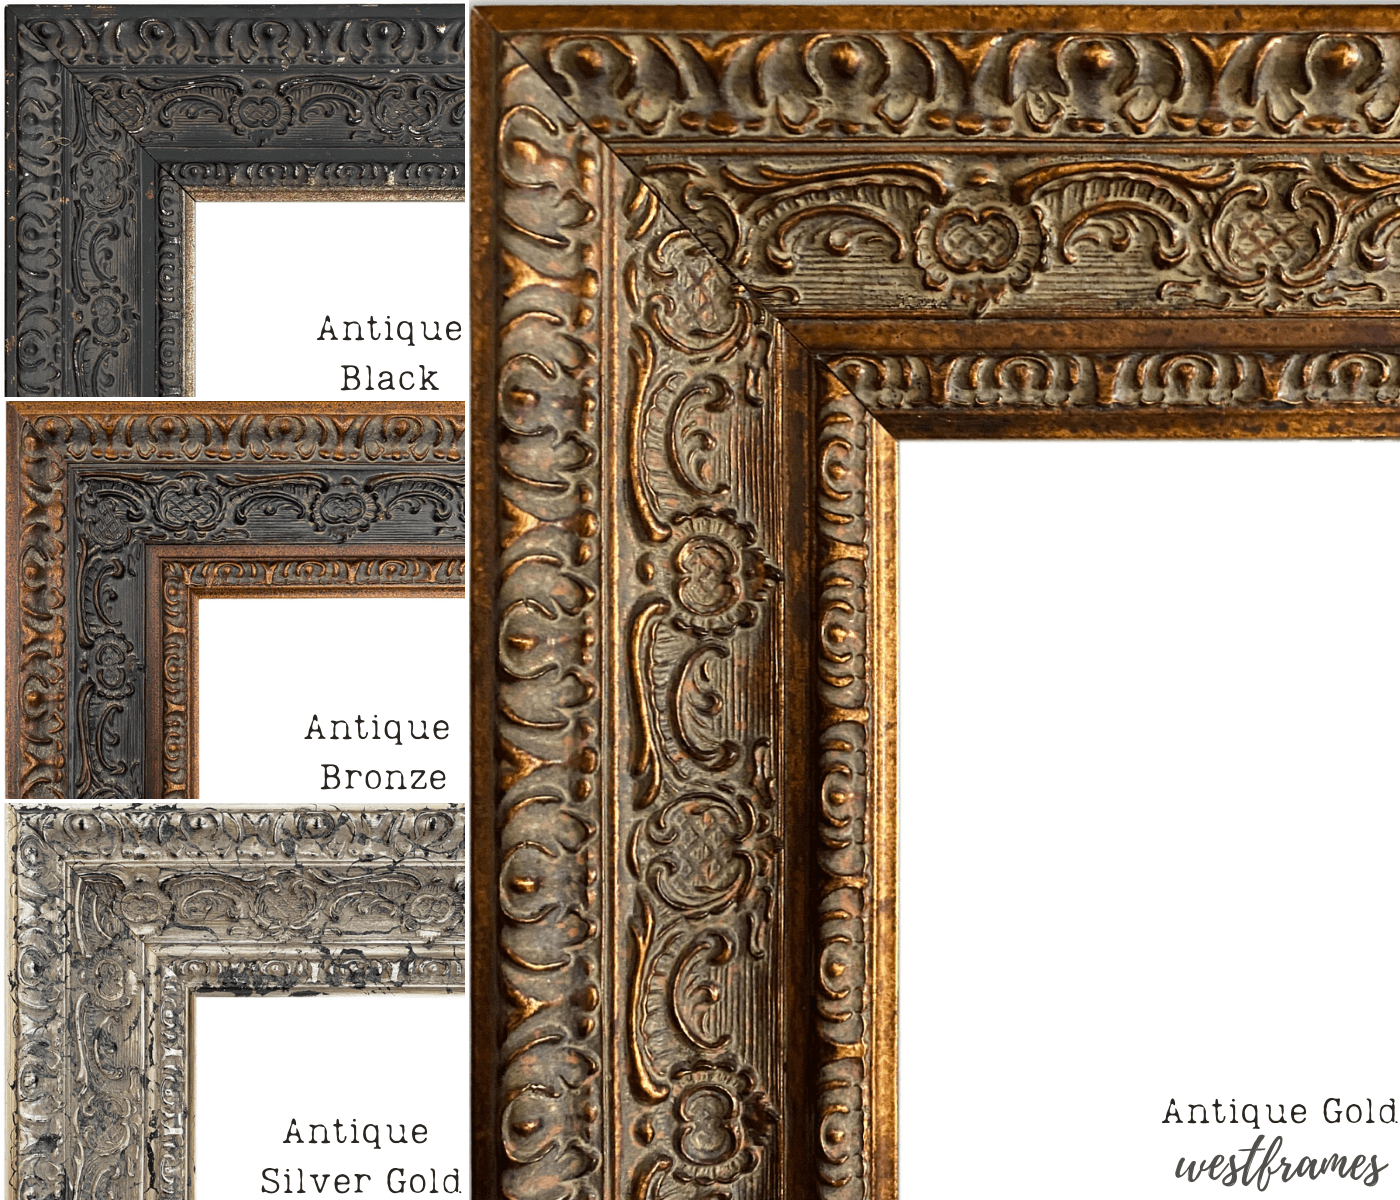 Parisienne Ornate Embossed Wood Picture Frame Antique Black Patina Finish 3" Wide - West Frames